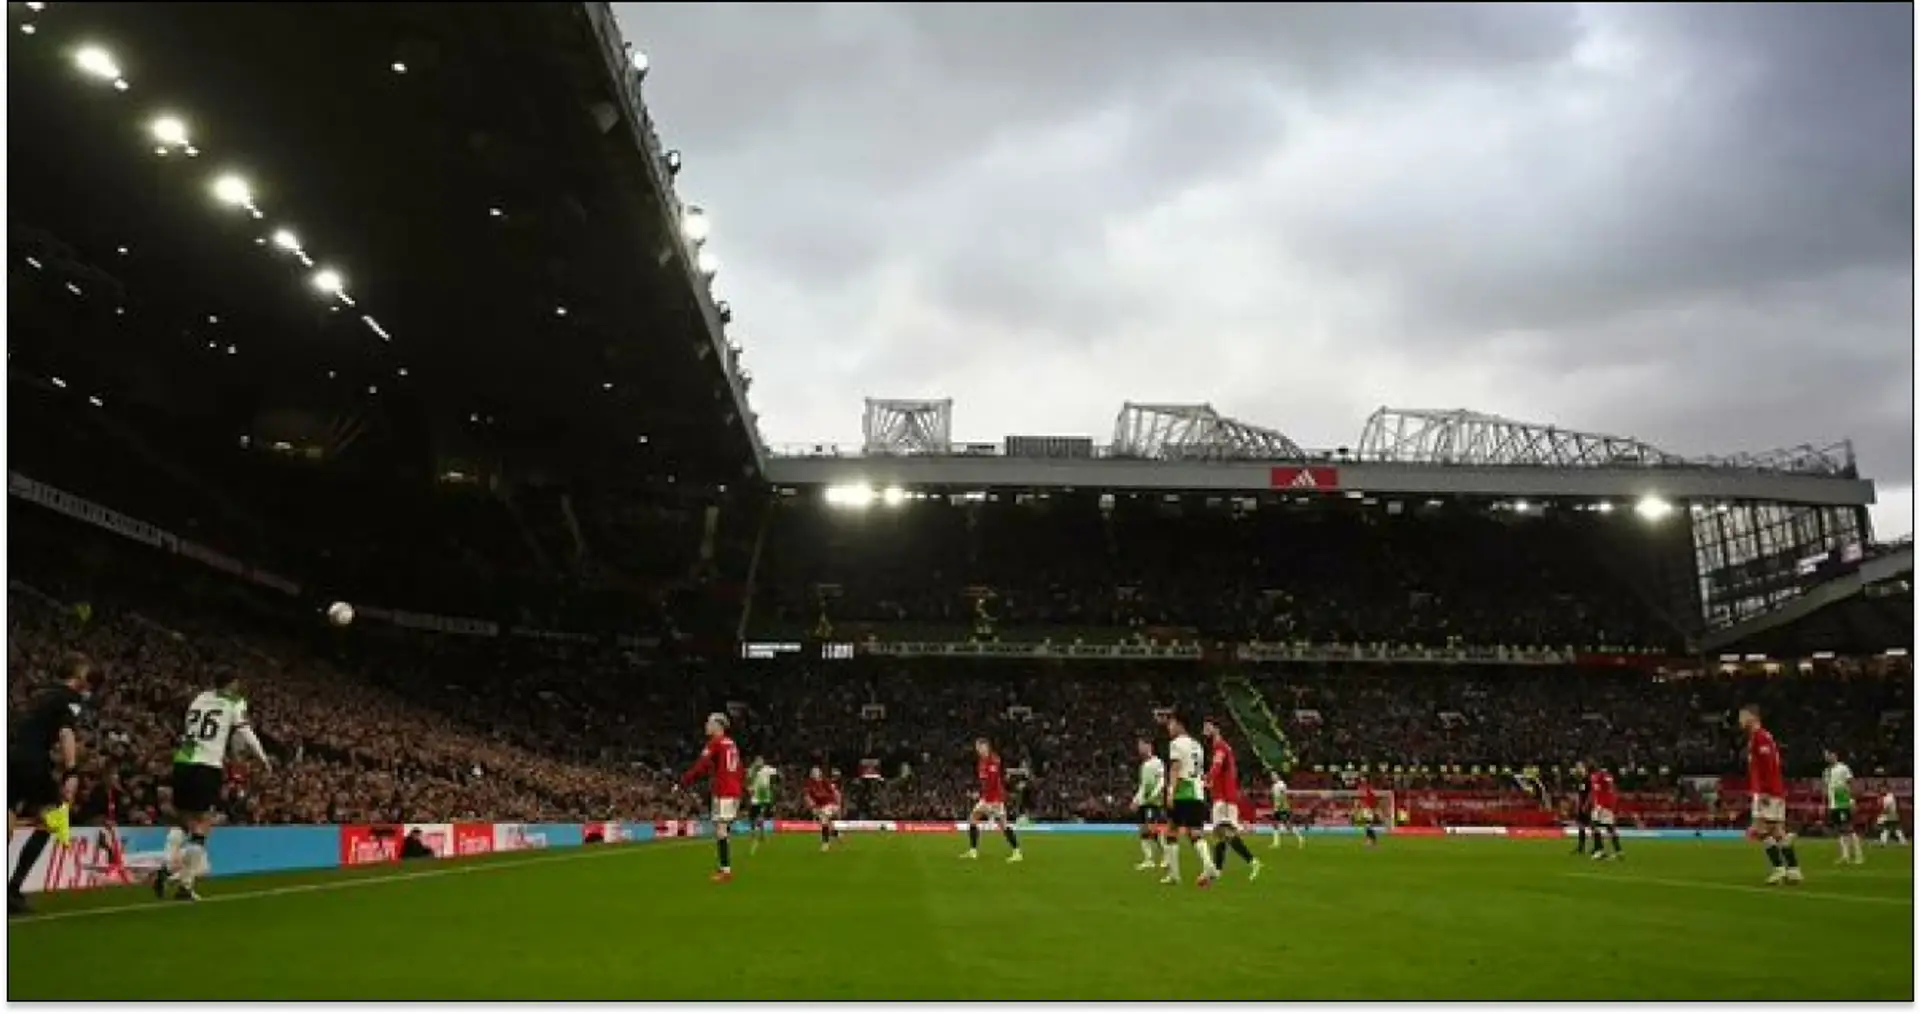 Anti-Hillsborough chants heard during Man United v Liverpool, FA release statement